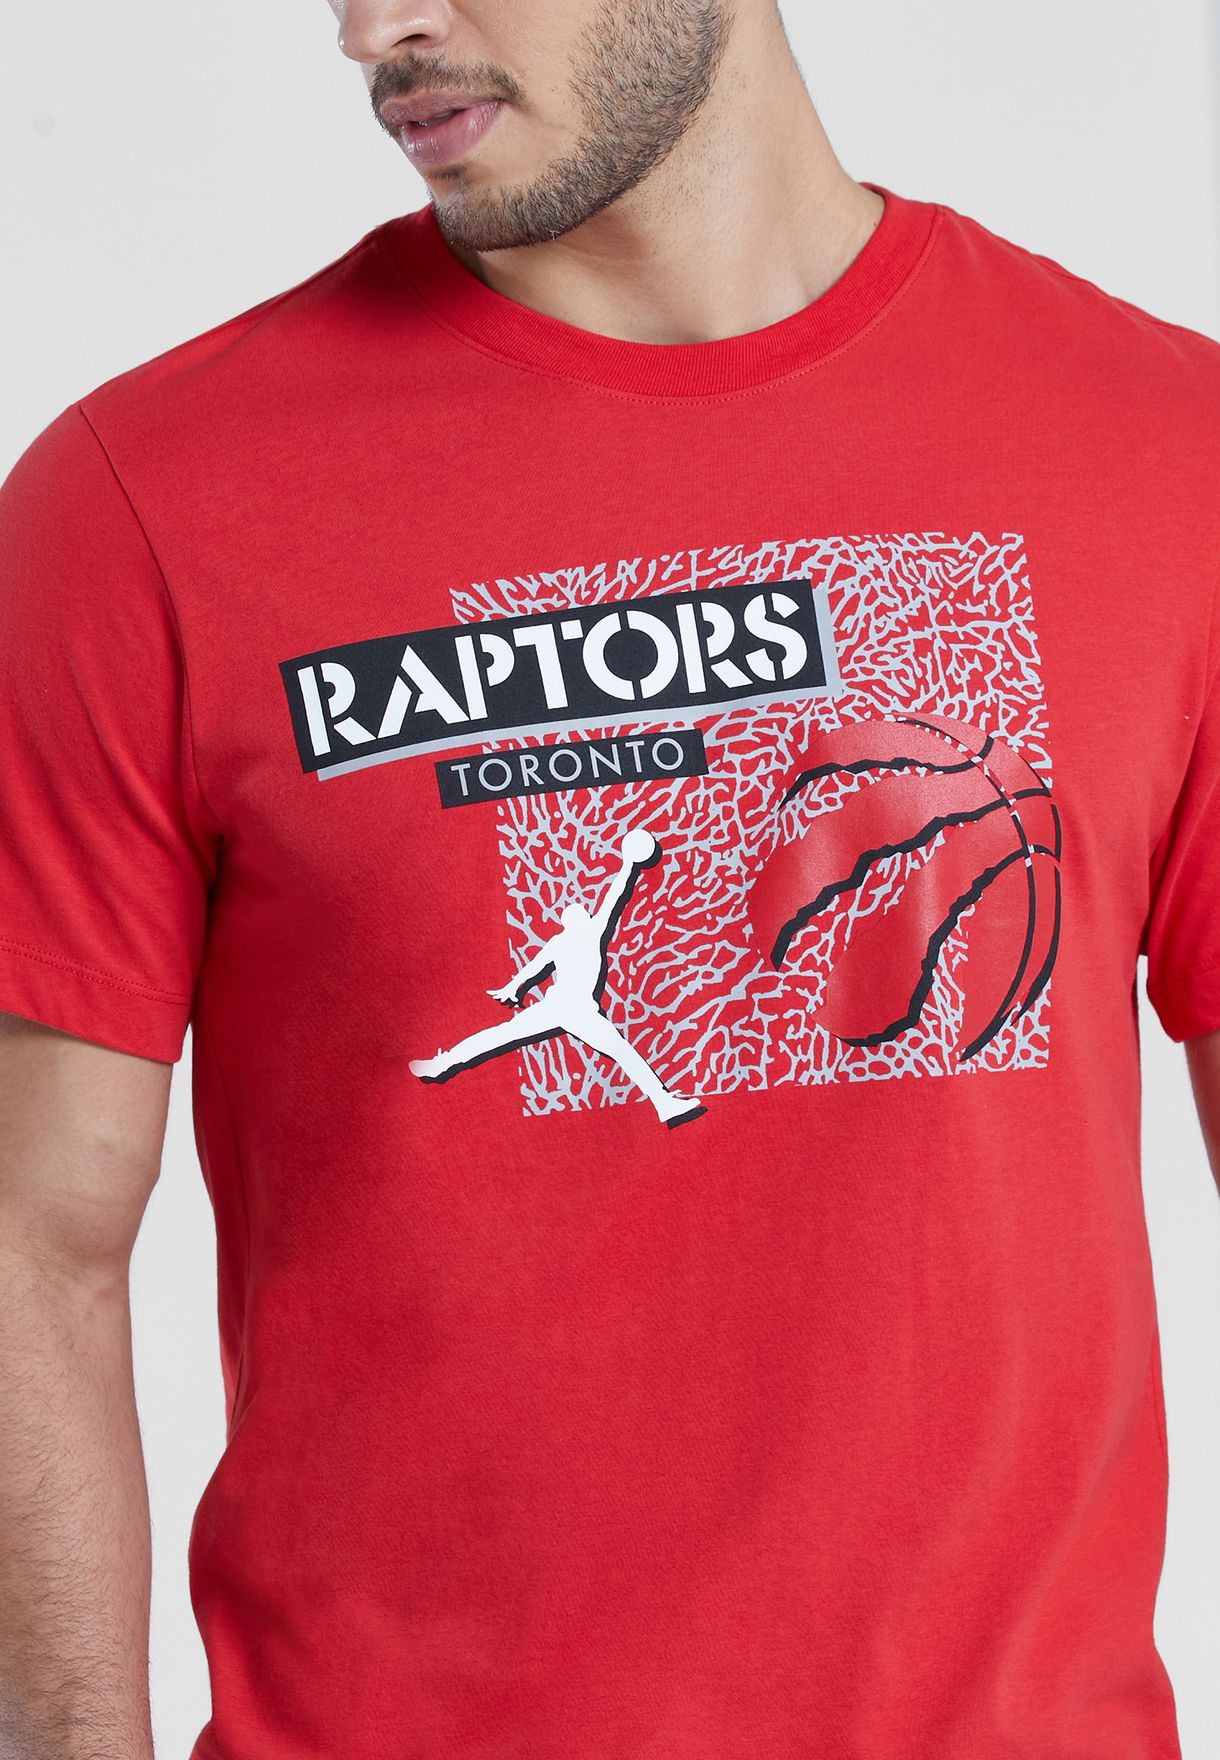 Toronto Rapter Statement T-Shirt